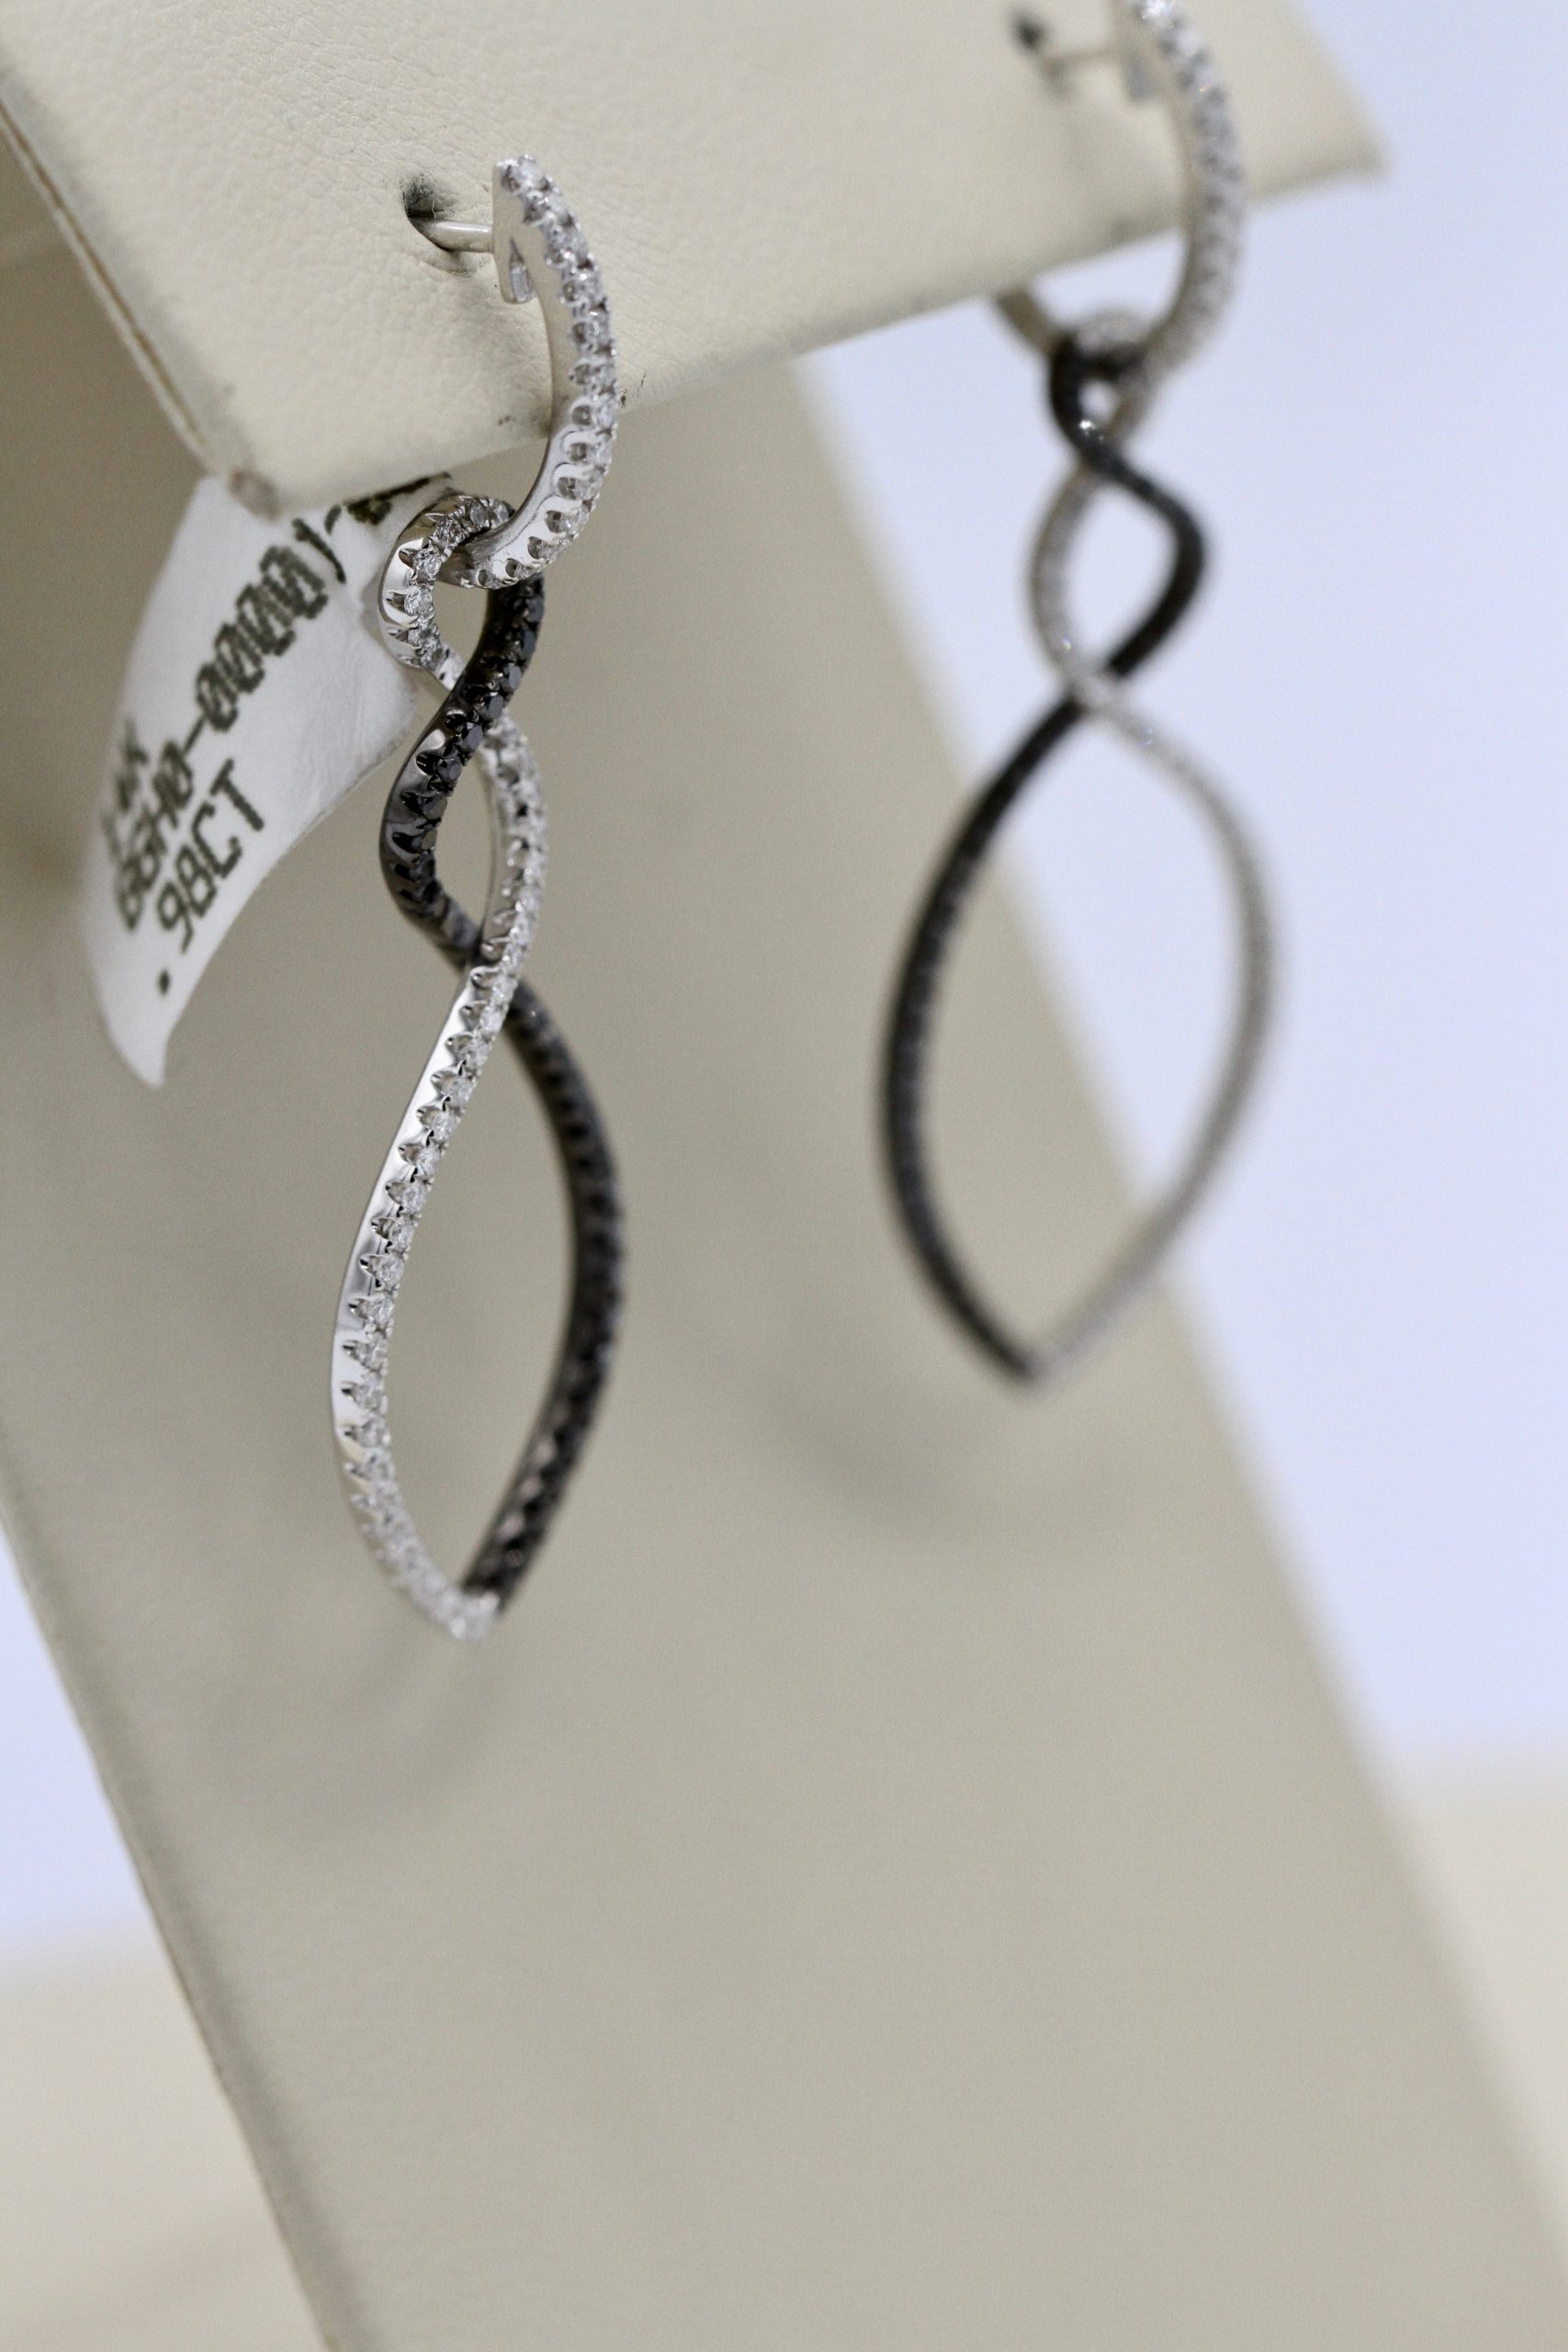 Silver and black diamond earrings